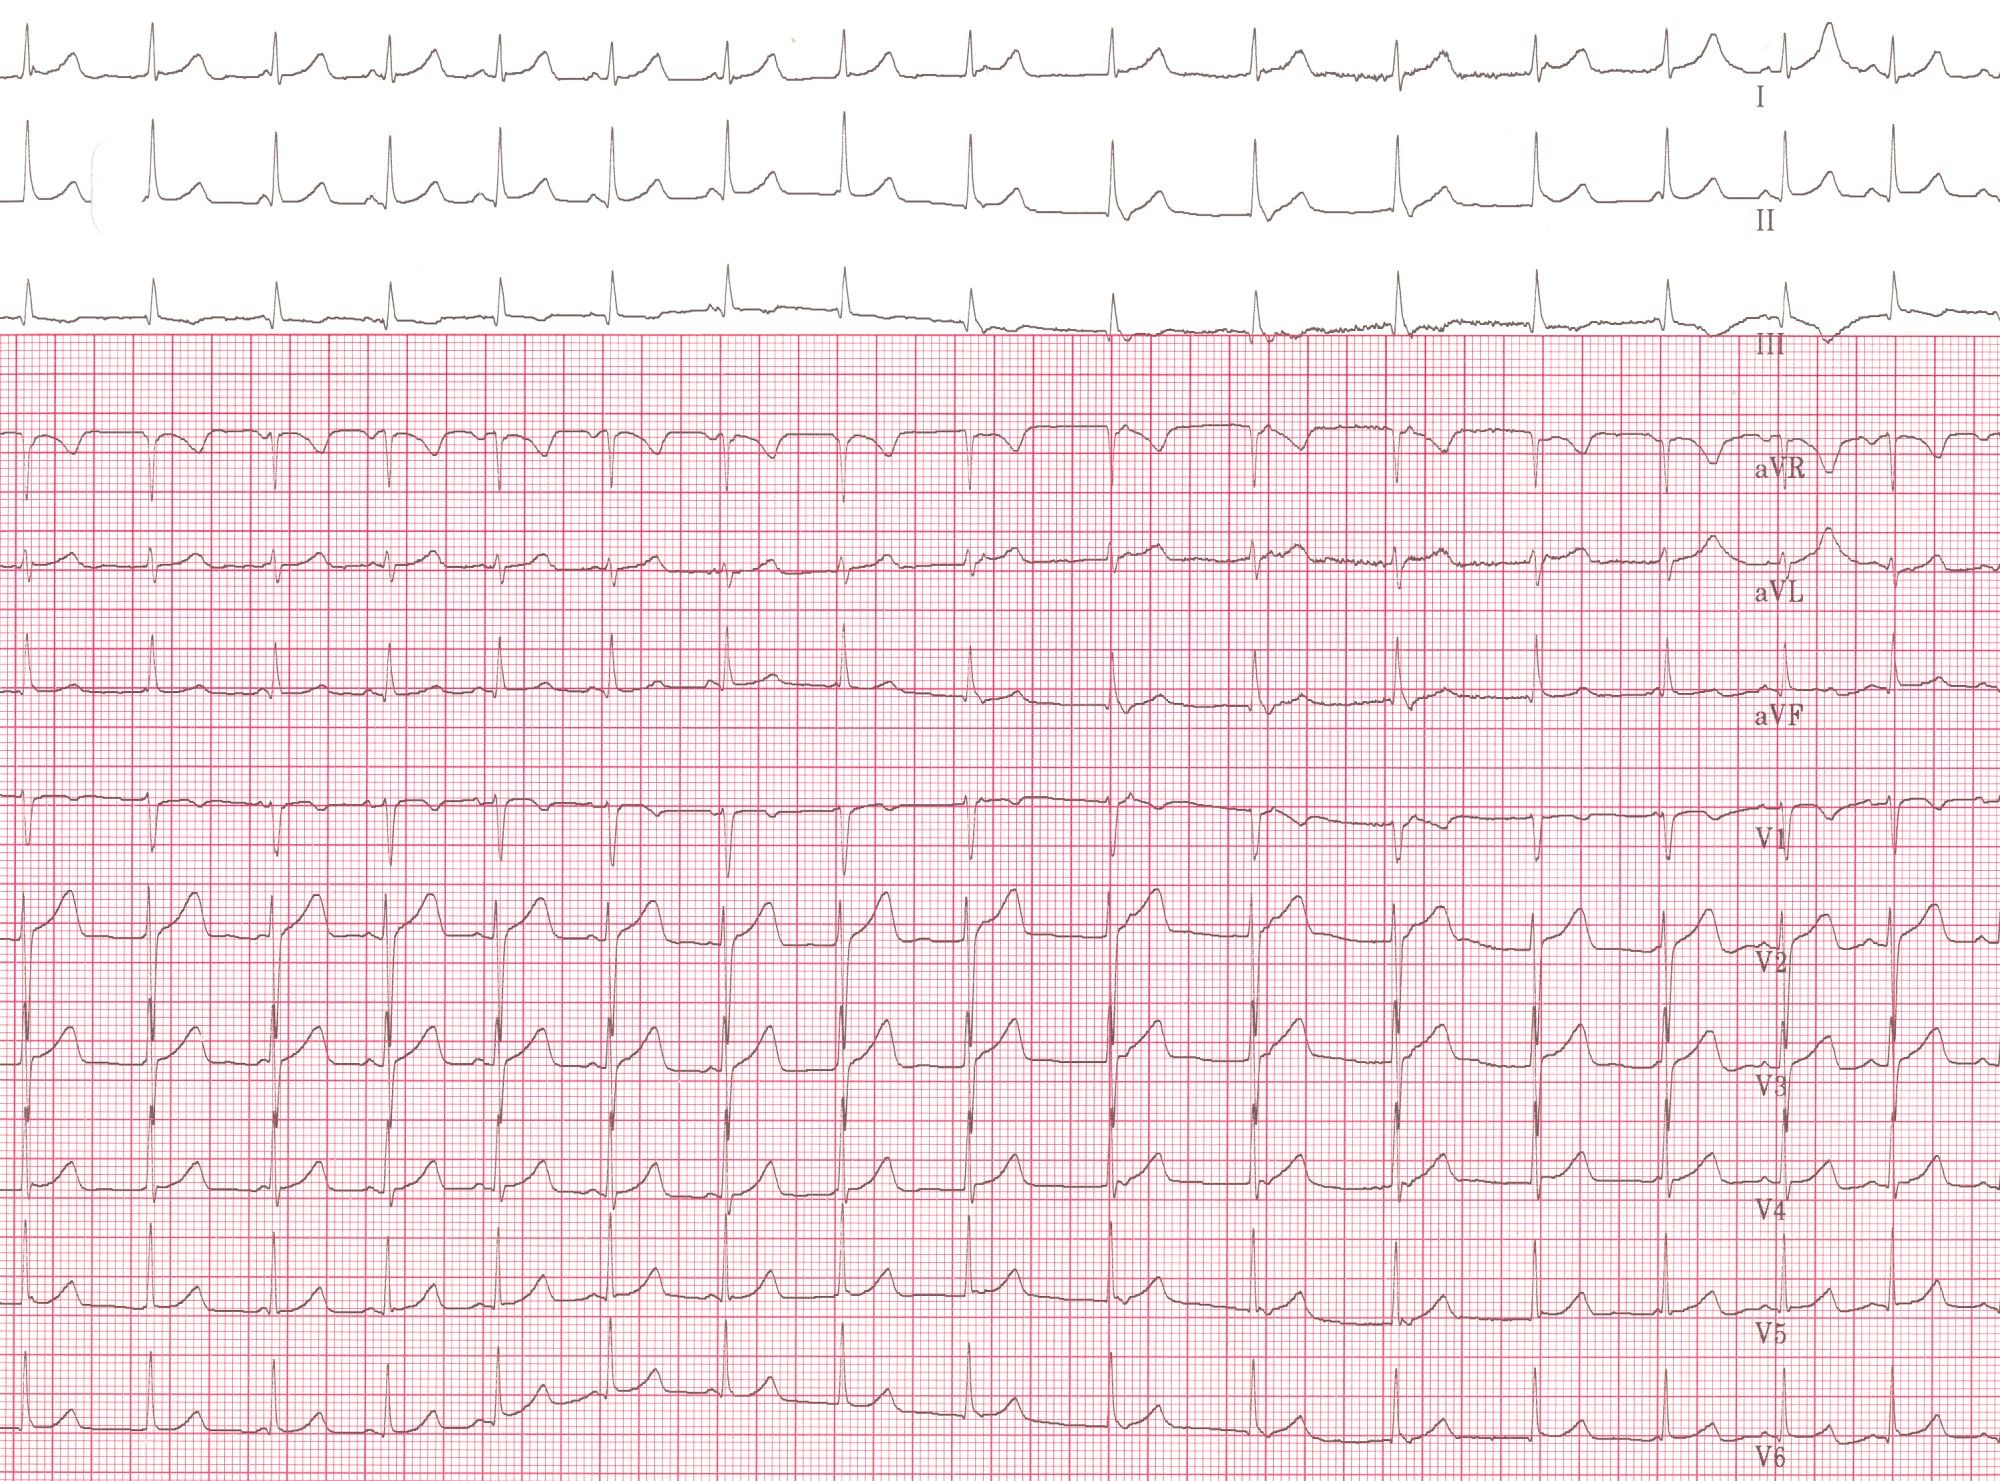 12 lead EKG: Junctional Ectopic Tachycardia (JET)